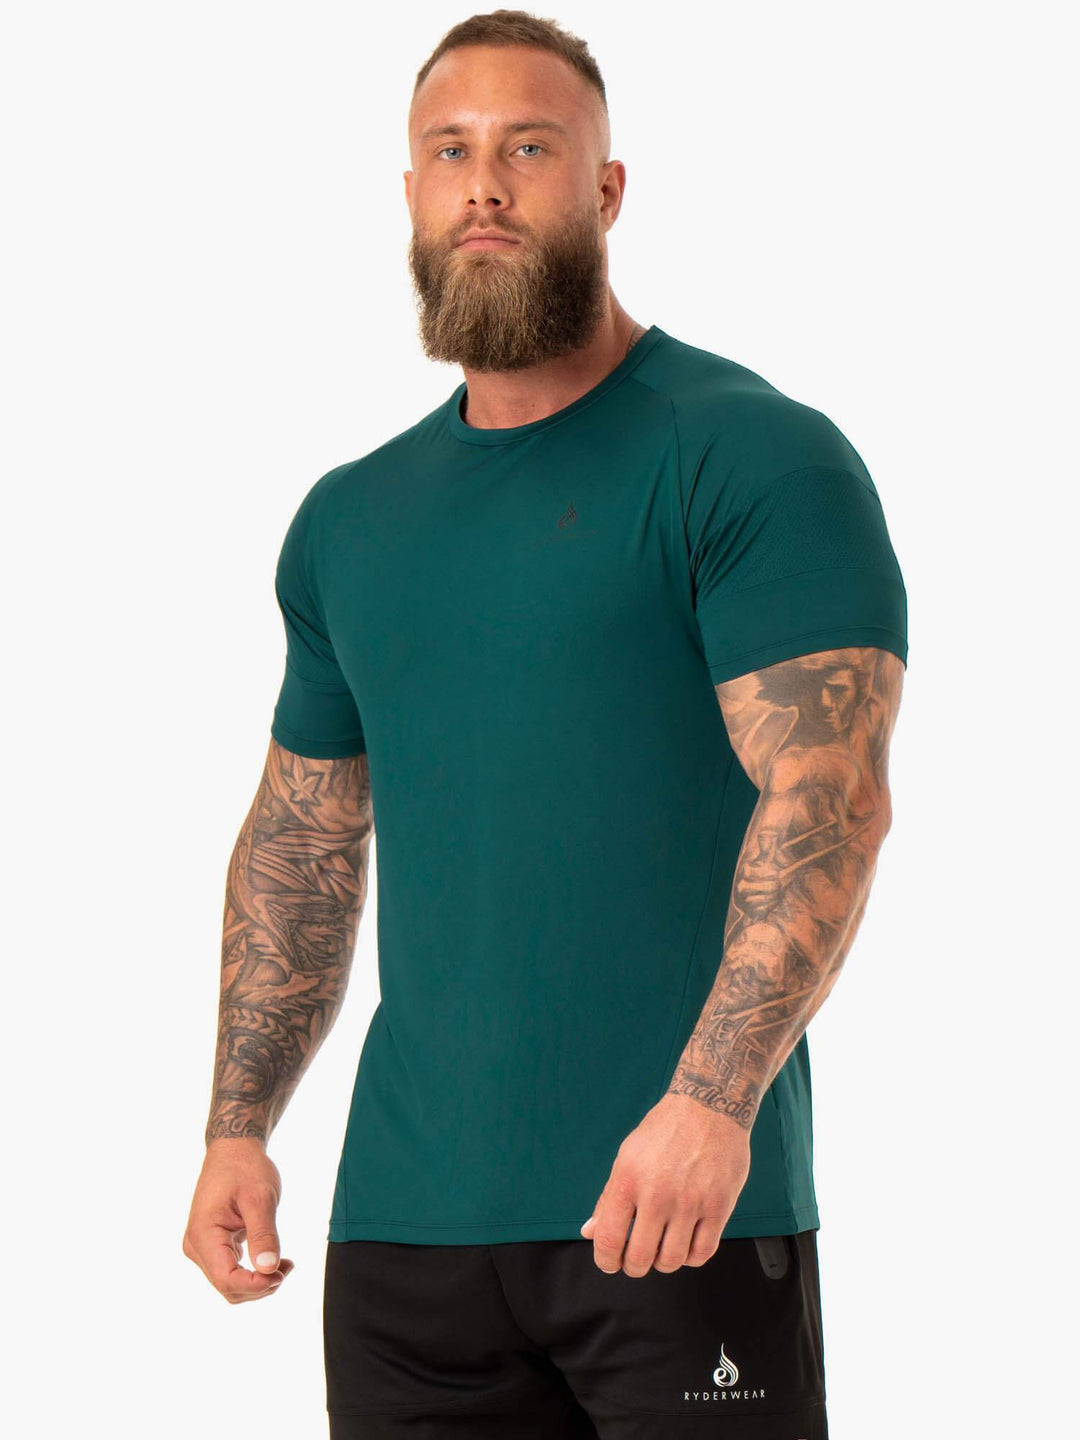 Action Mesh T-Shirt - Emerald Clothing Ryderwear 